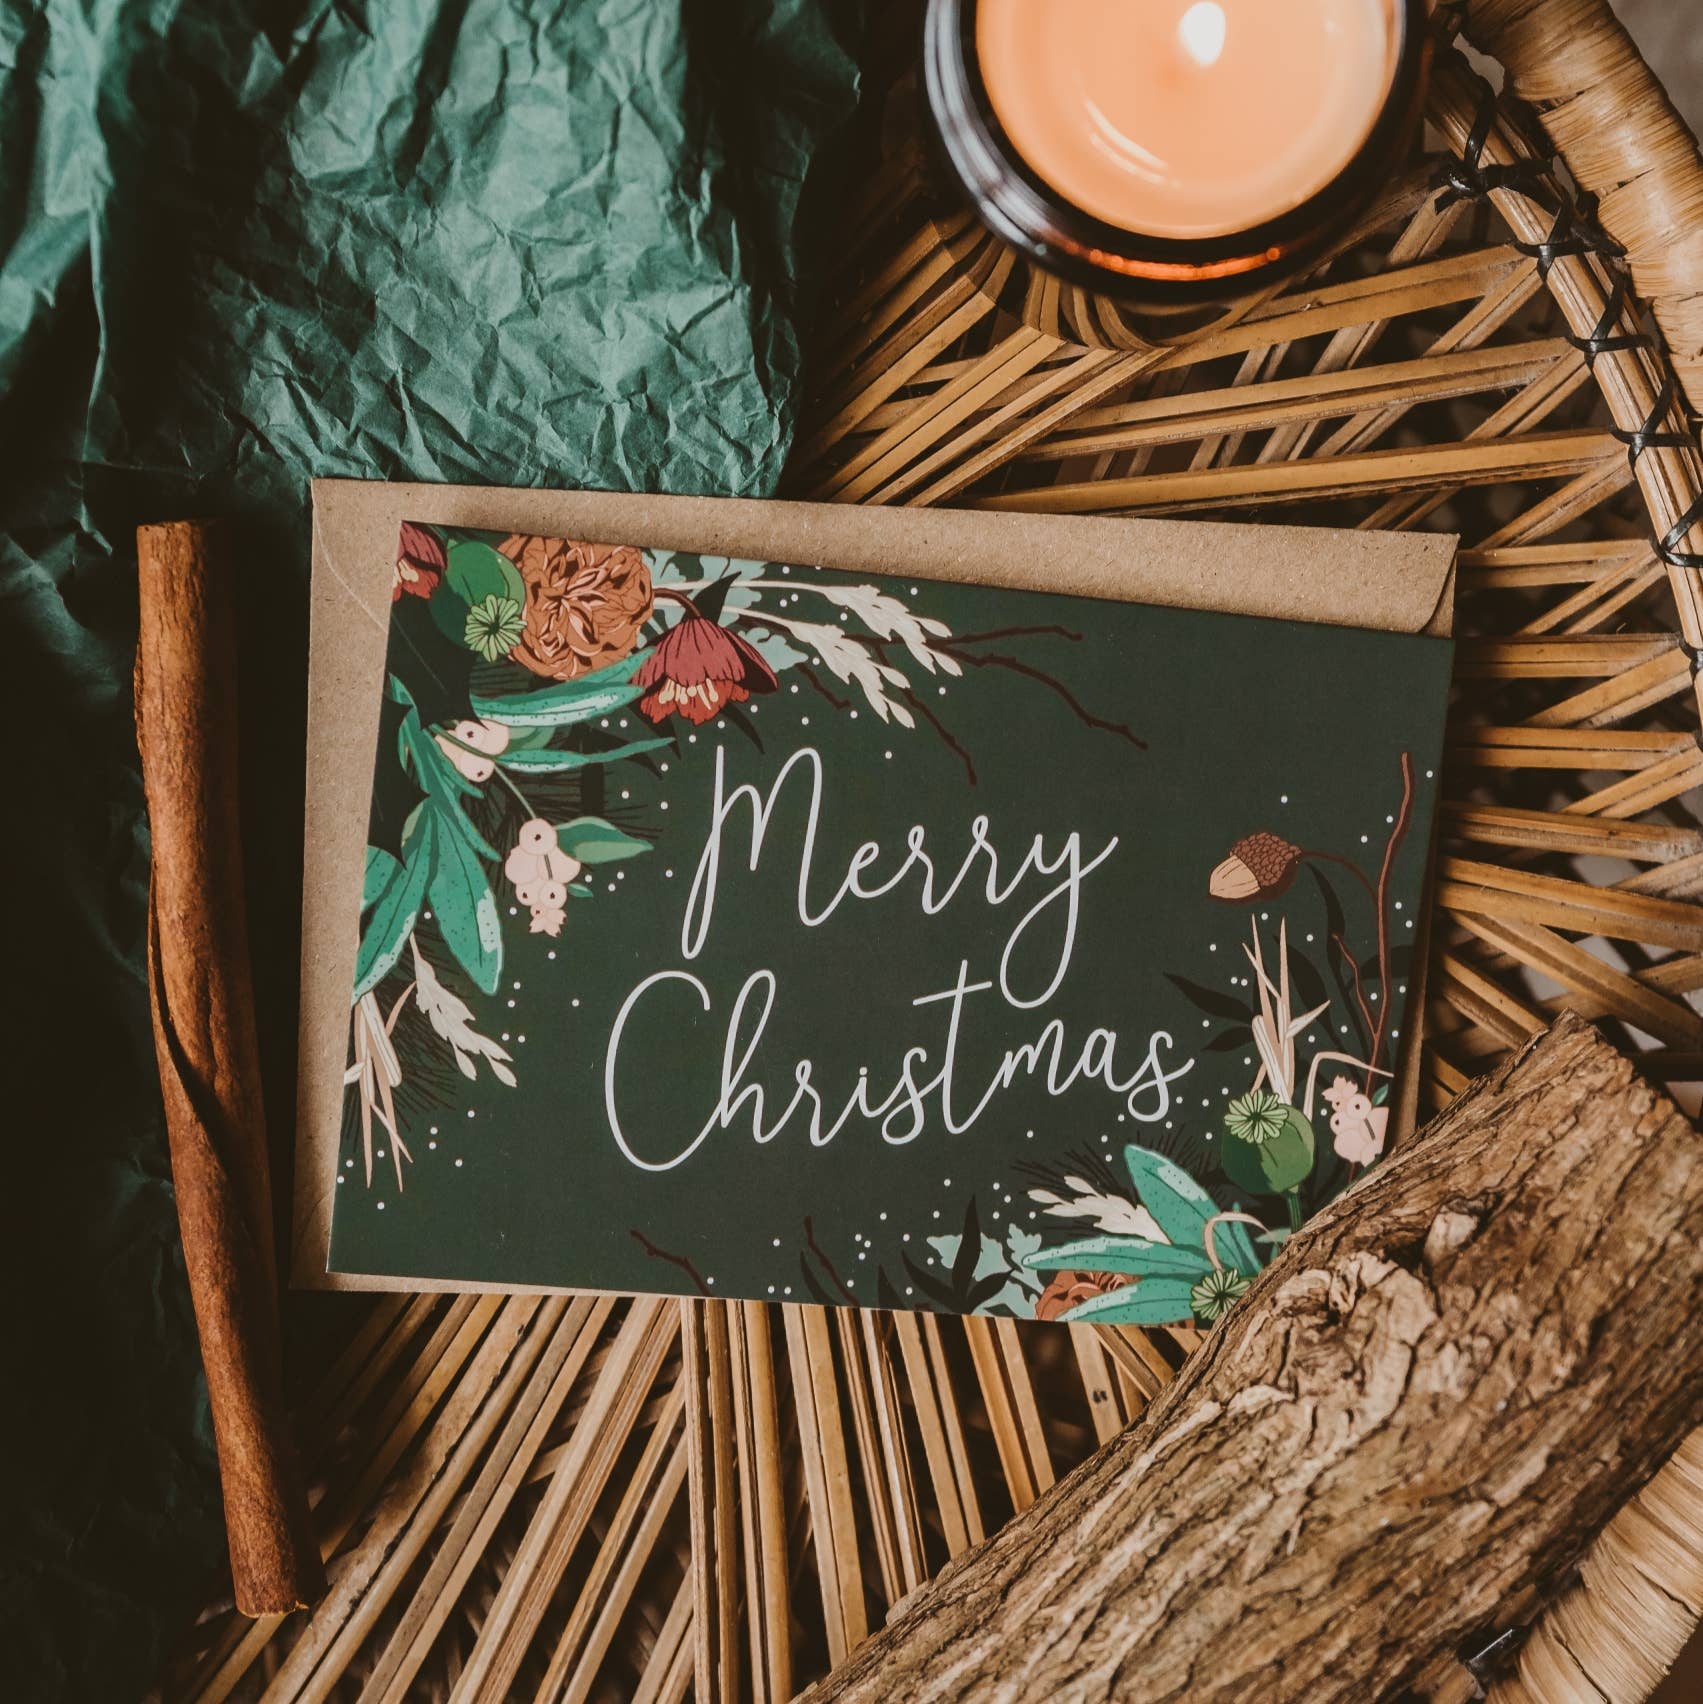 Merry Christmas Green Botanical Card